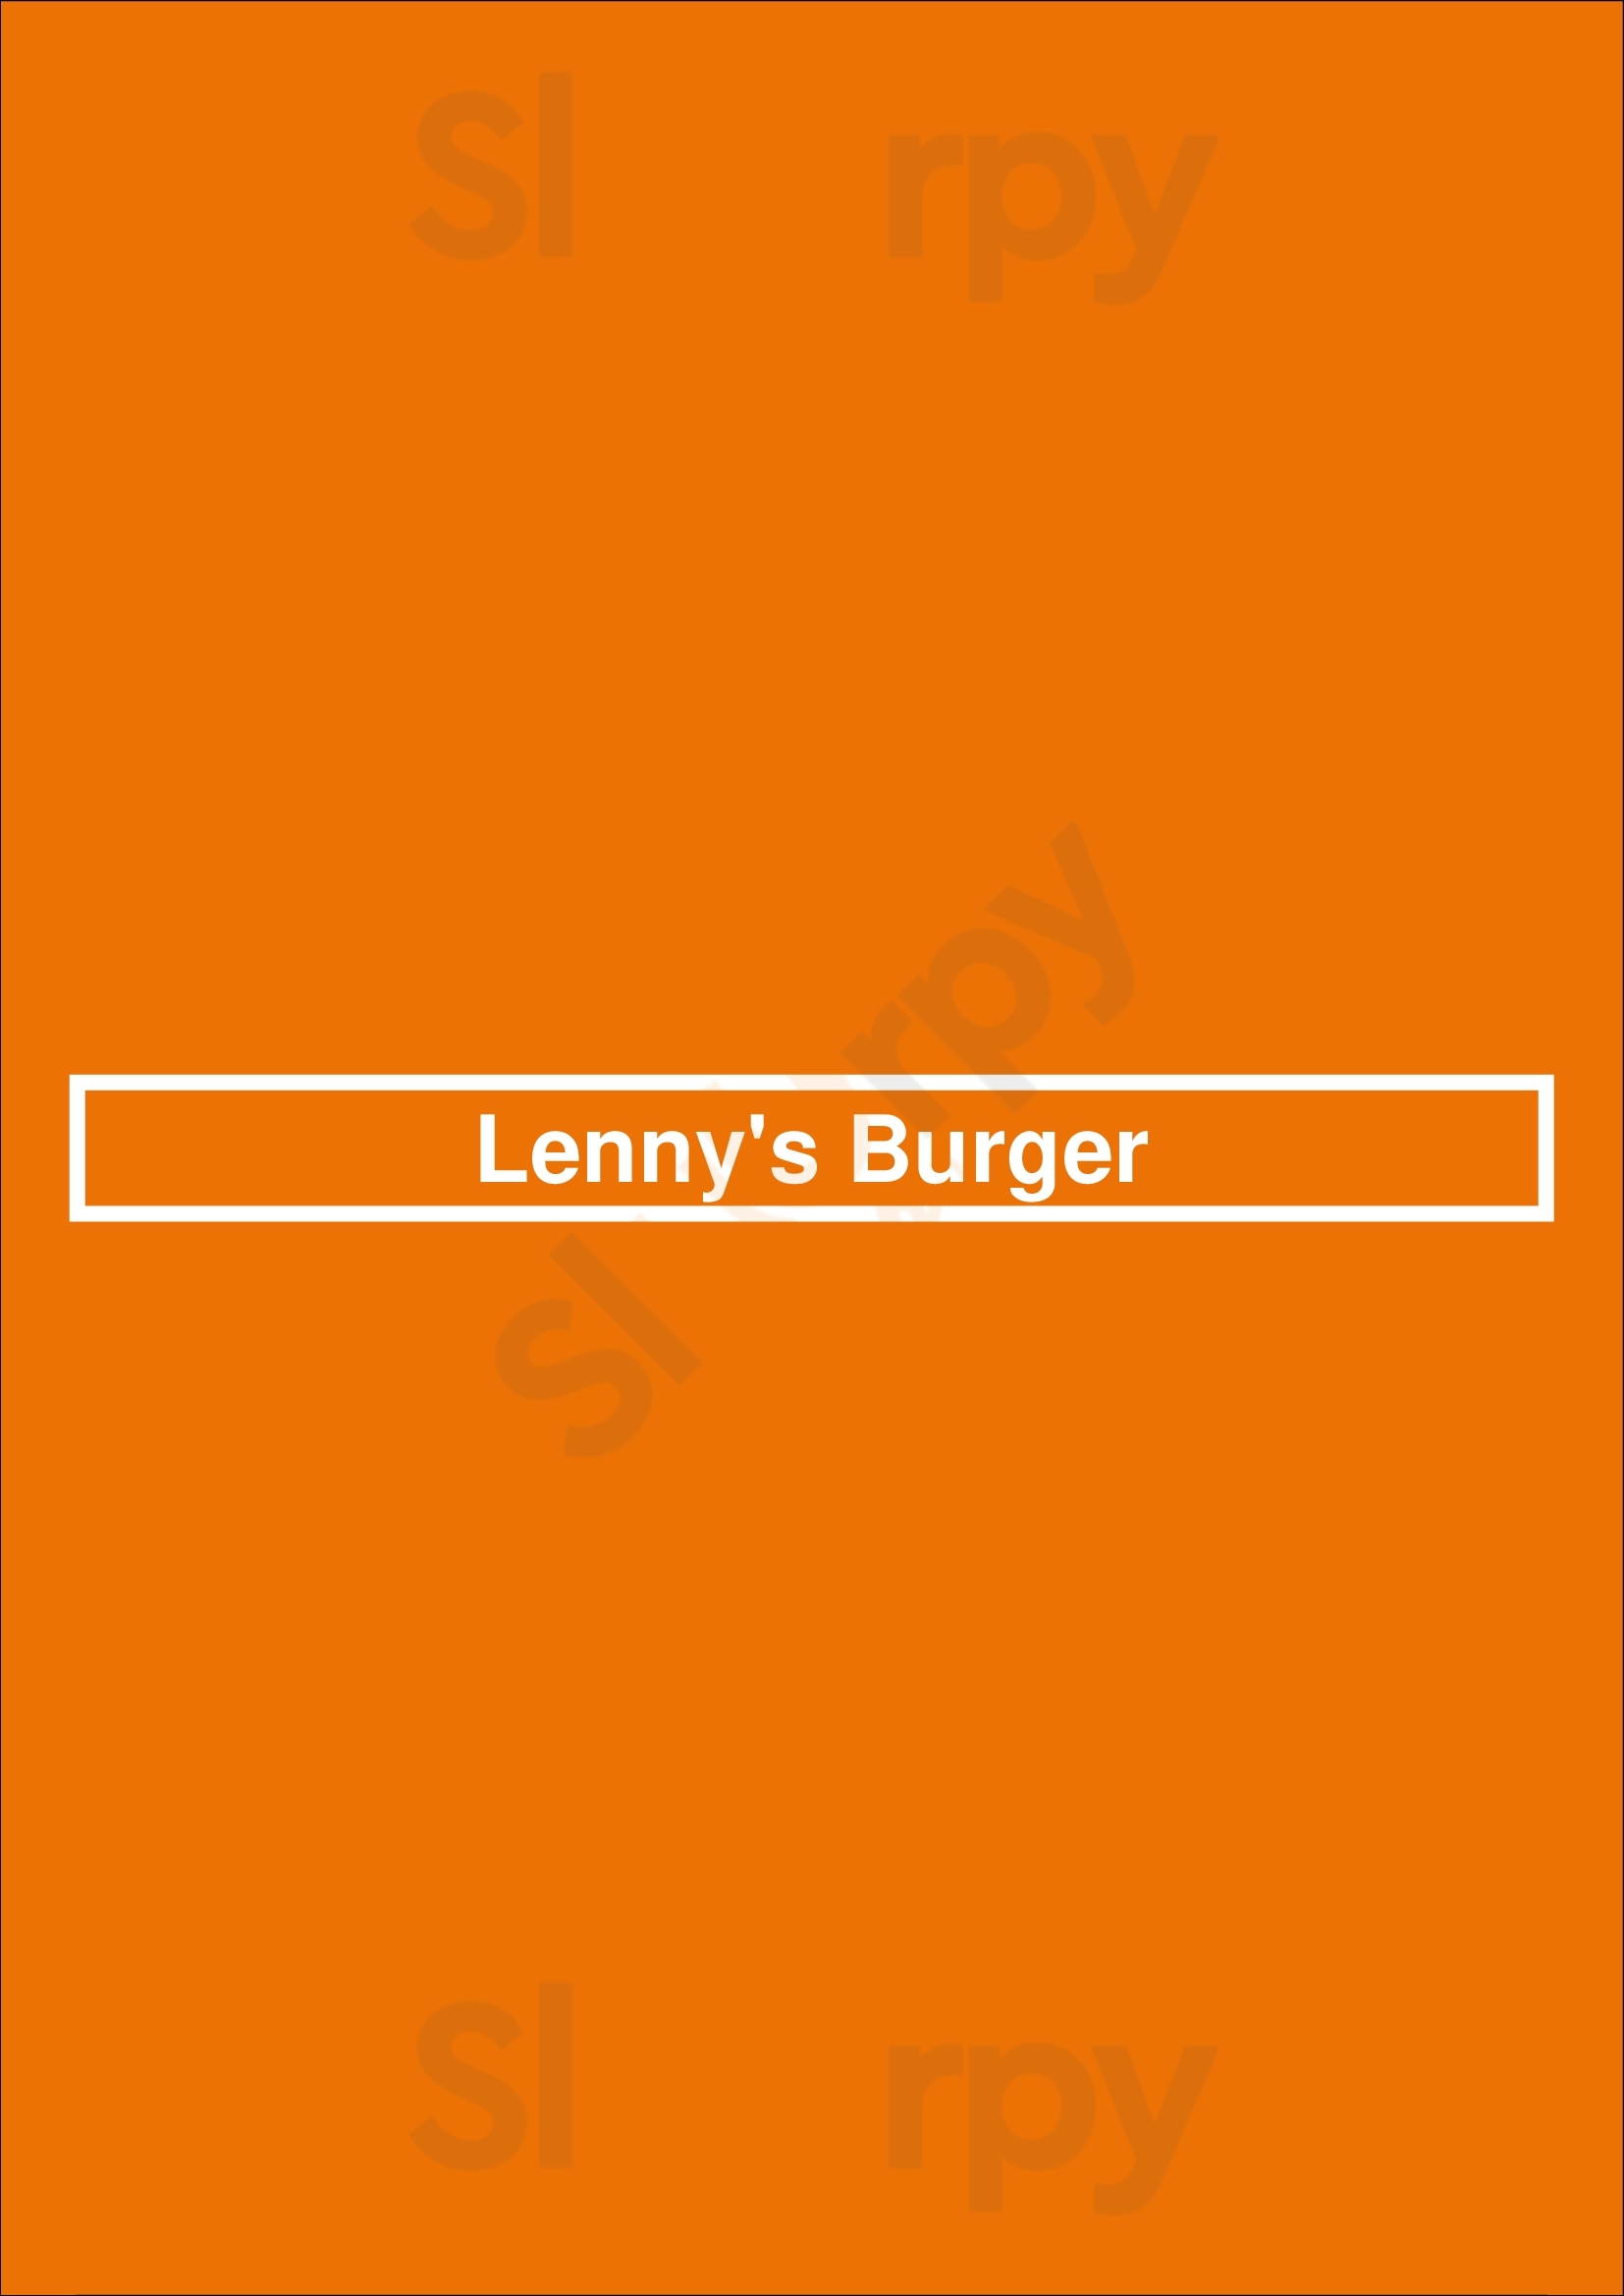 Lenny's Burger Glendale Menu - 1